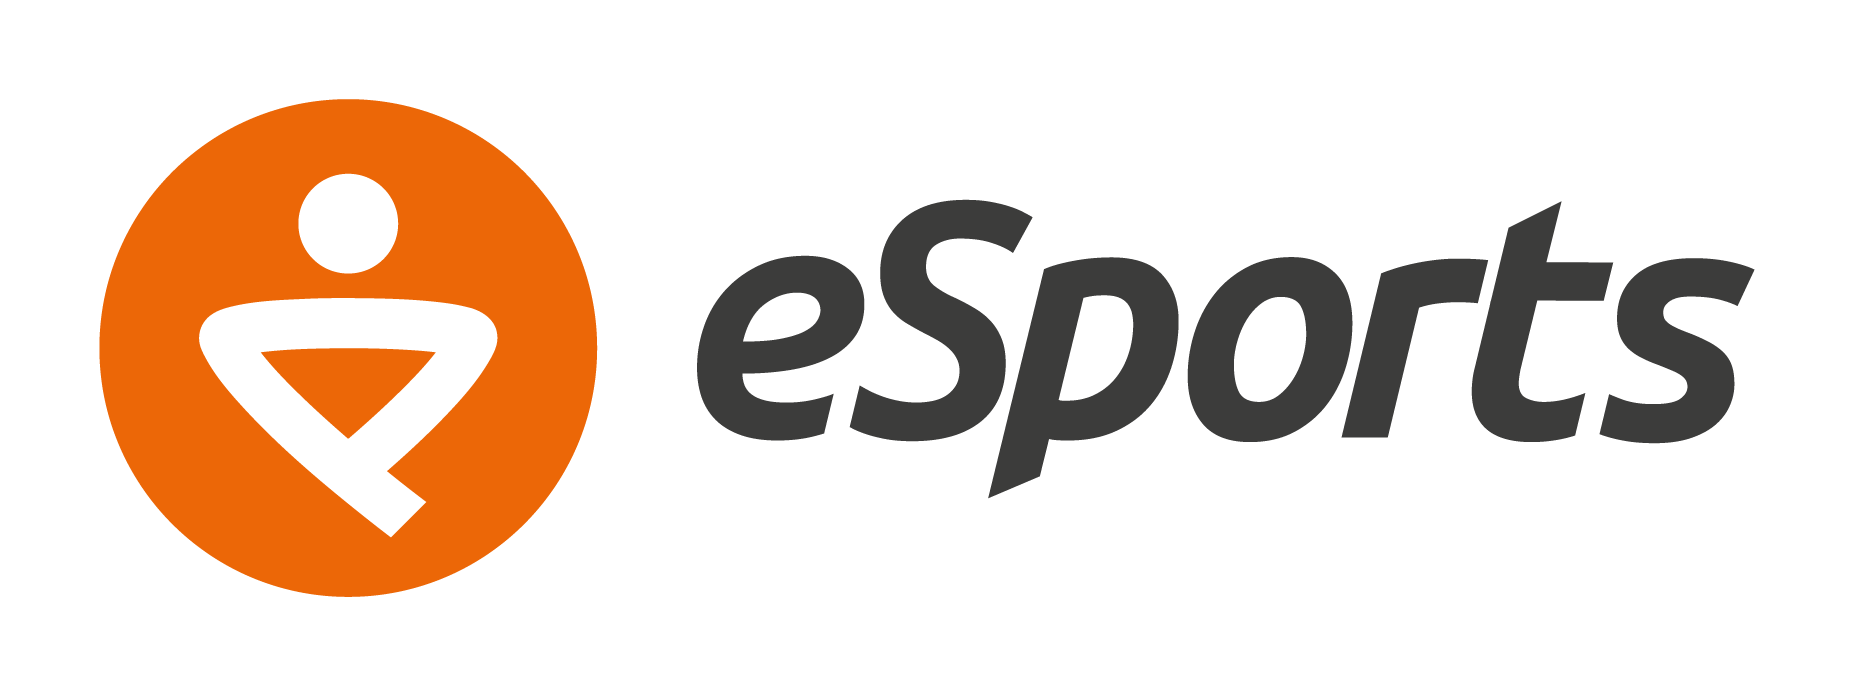 esports_logo-01